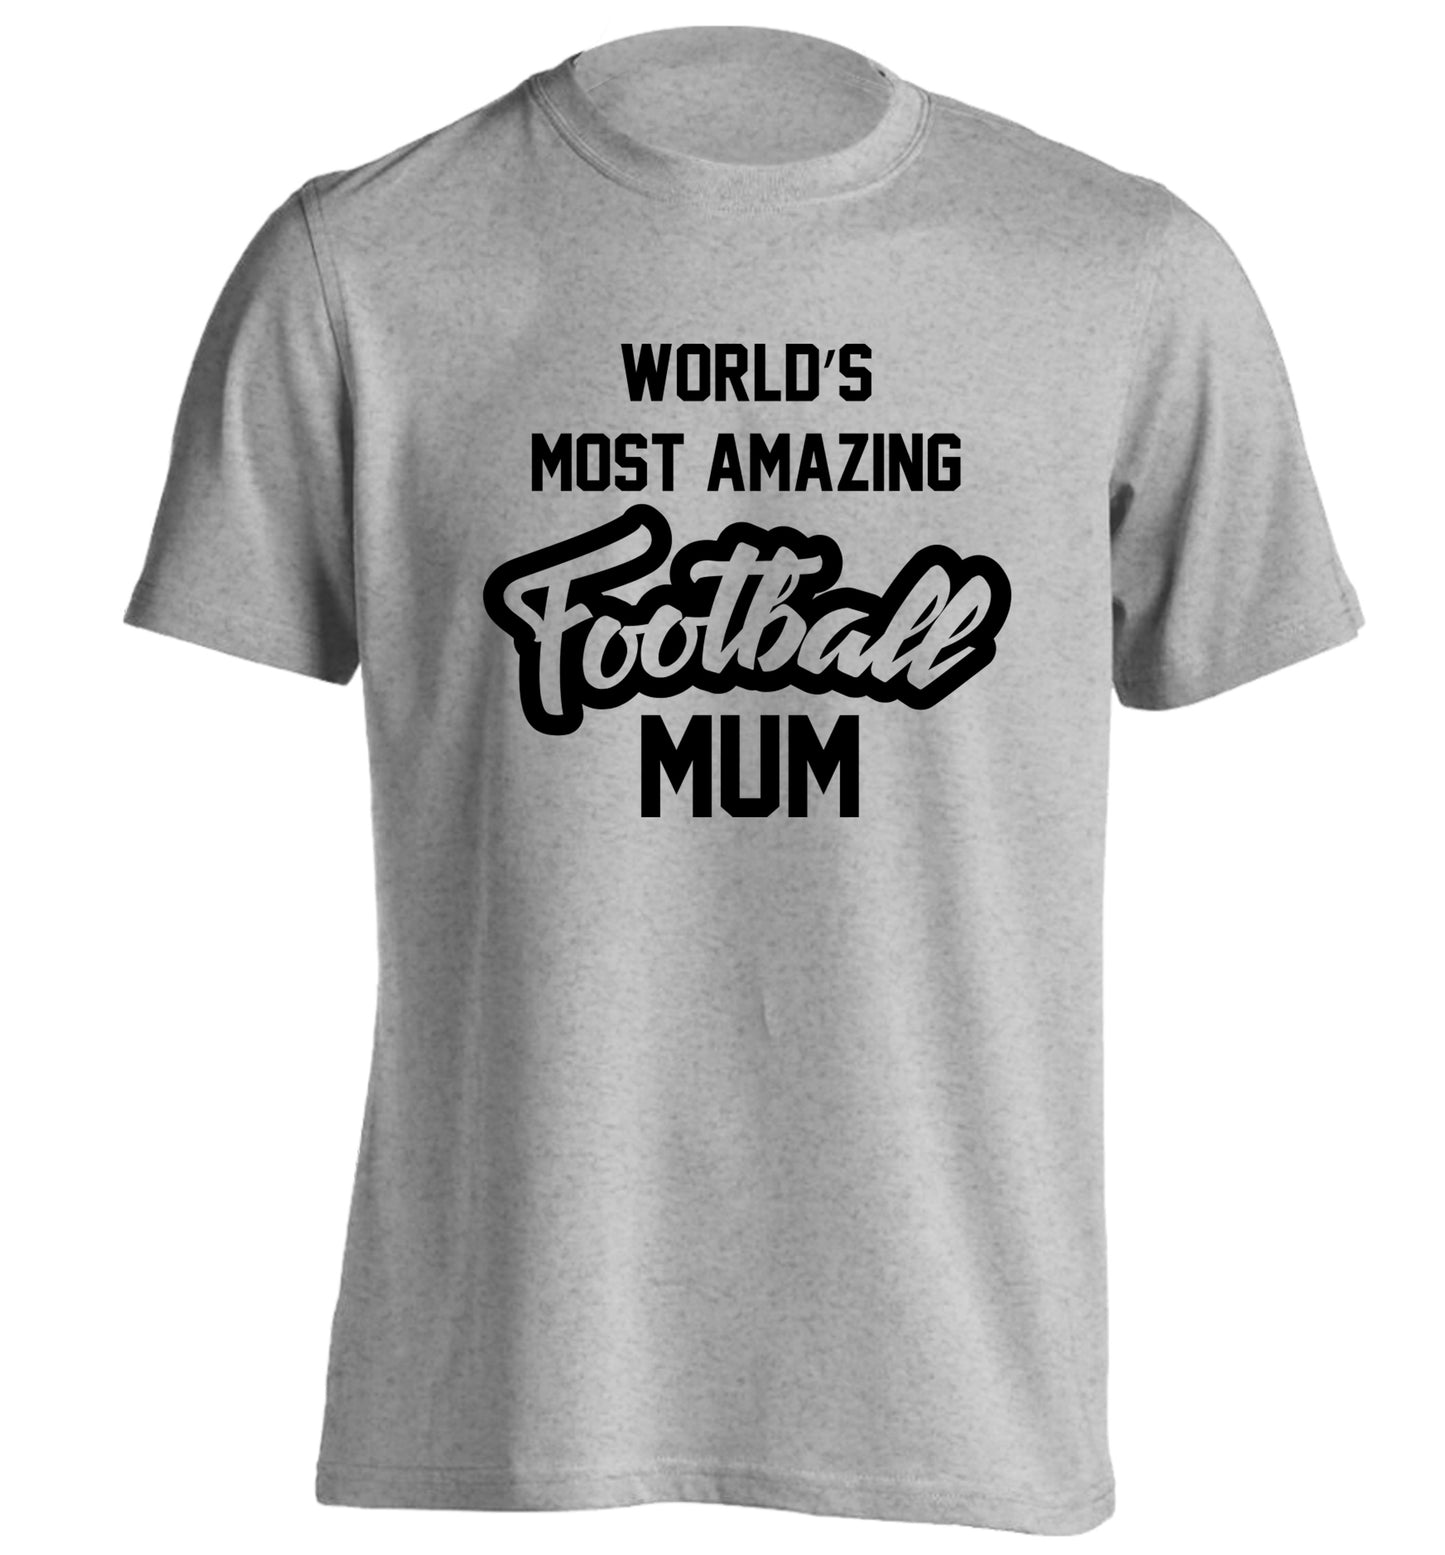 Worlds most amazing football mum adults unisexgrey Tshirt 2XL